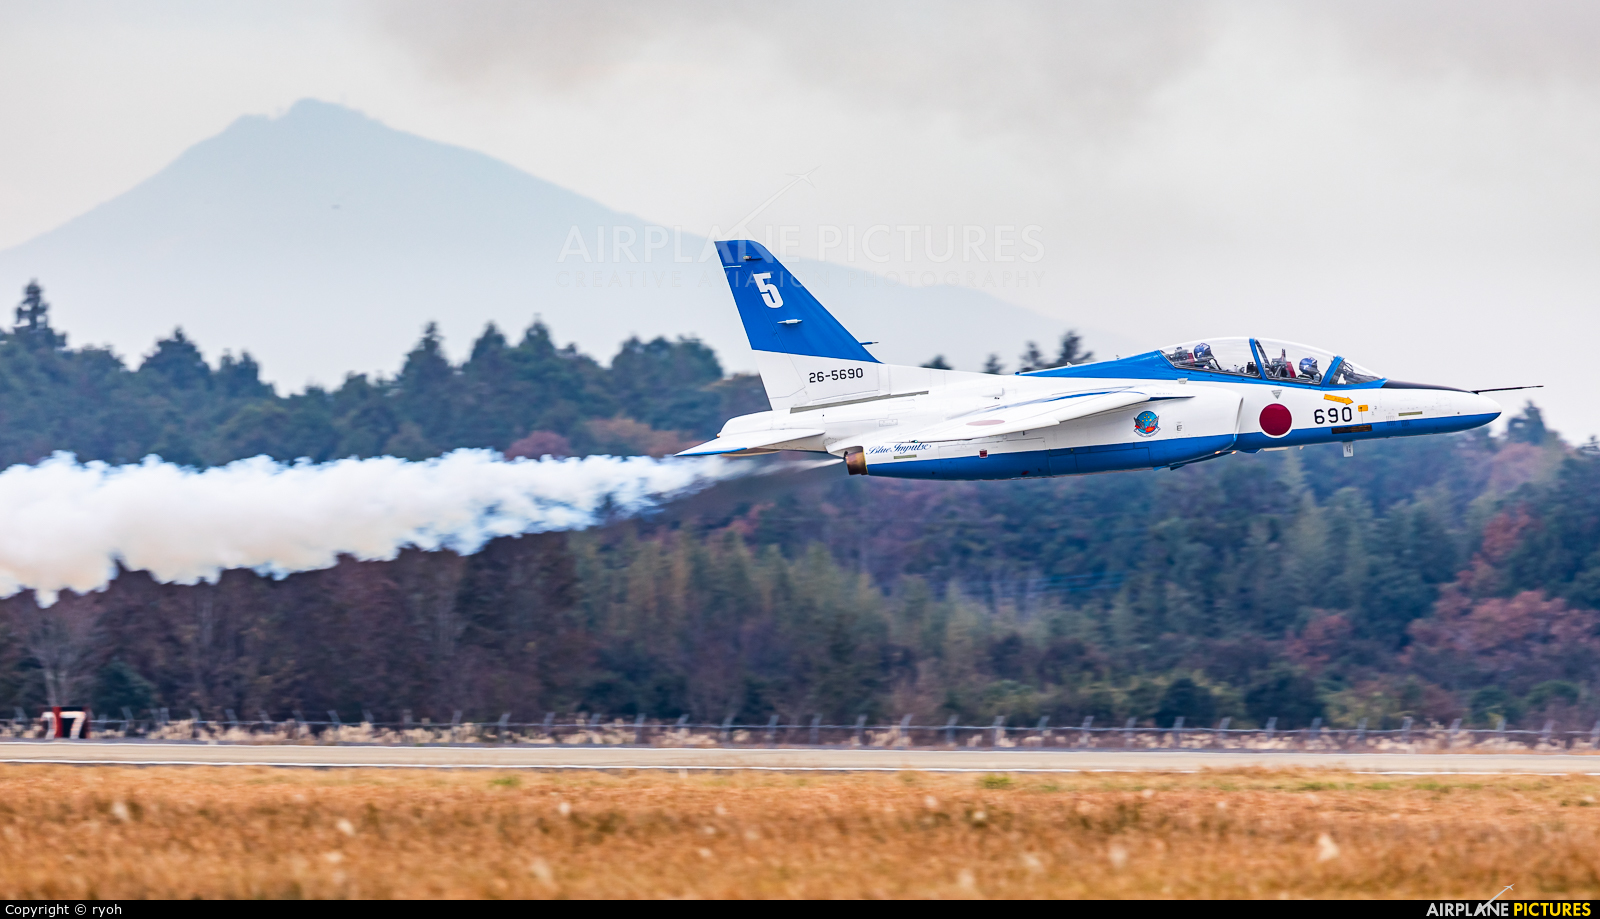 Japan - ASDF: Blue Impulse 26-5690 aircraft at Ibaraki - Hyakuri AB